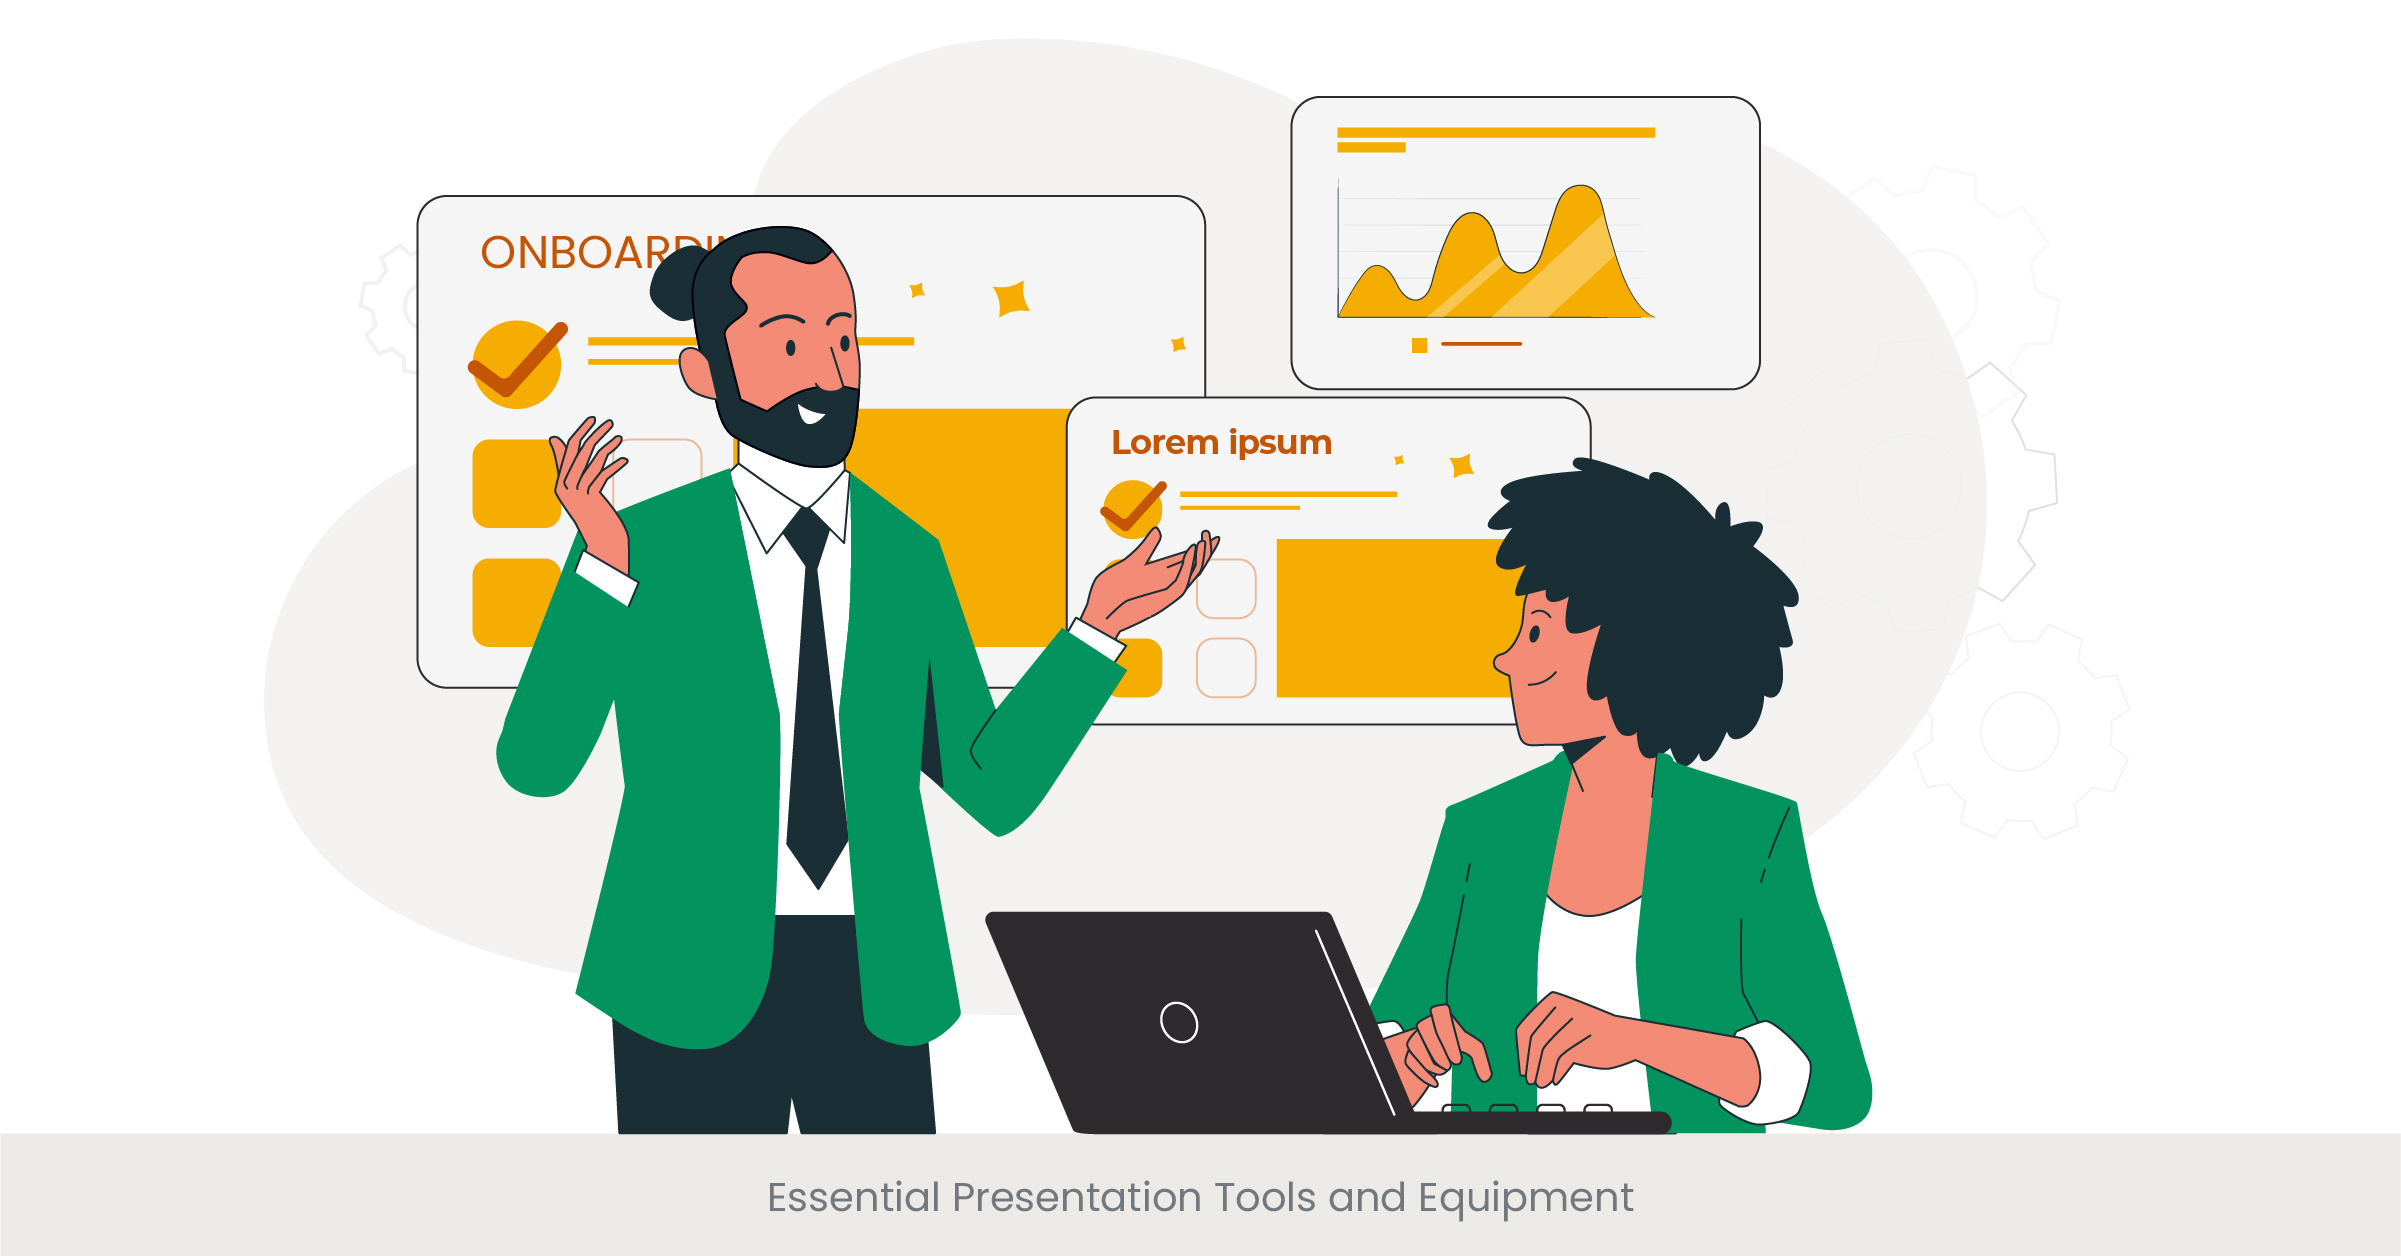 Essential Presentation Tools and Equipment